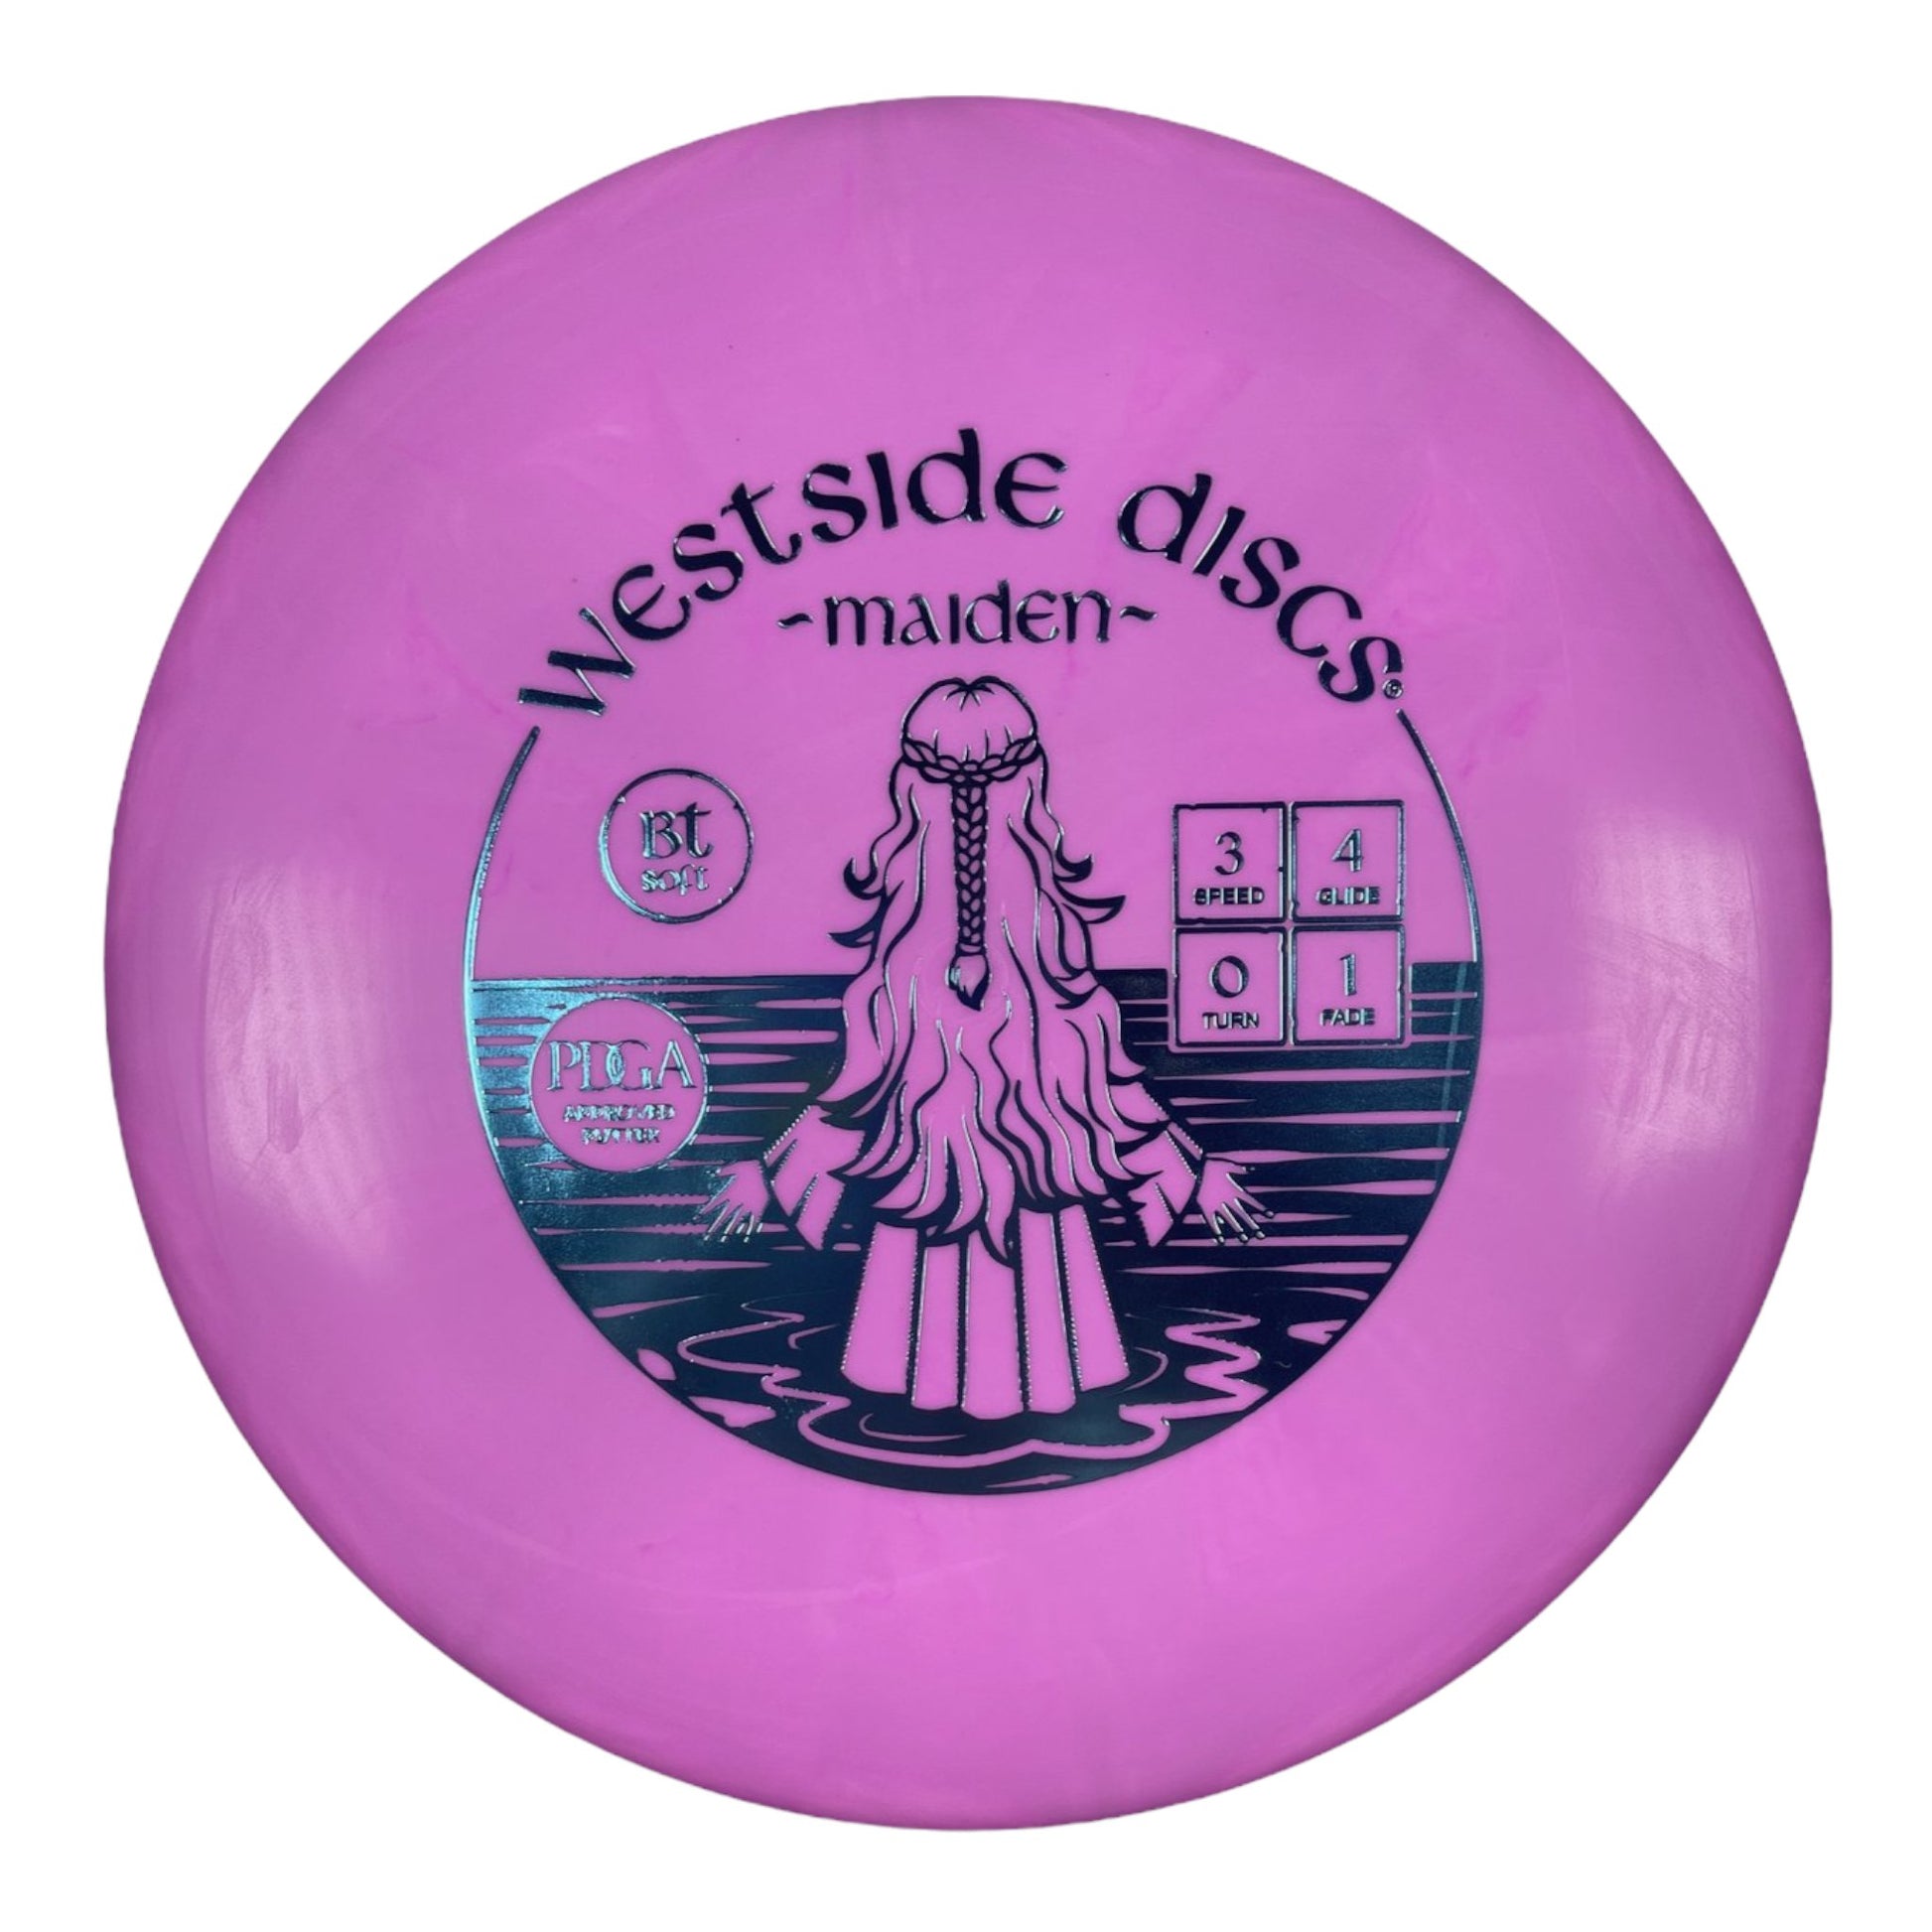 Westside Discs Maiden | BT Soft | Pink/Blue Disc Golf